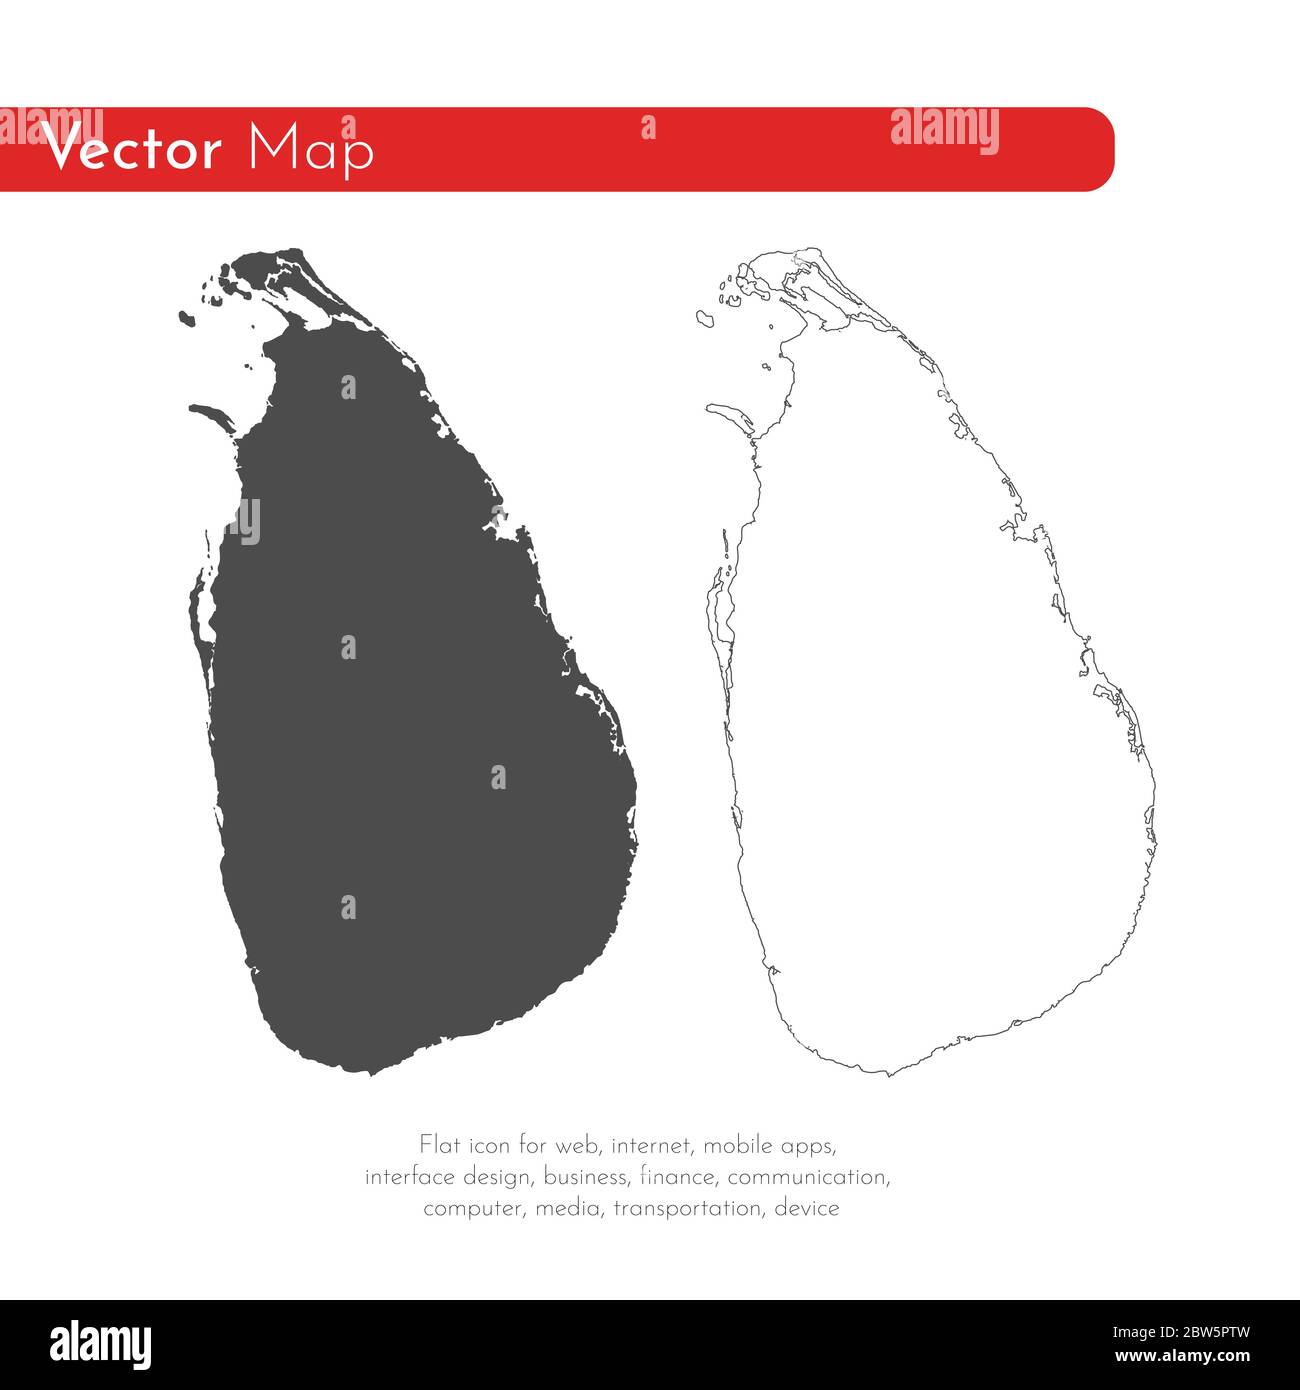 Vektorkarte Sri Lanka. Isolierte Vektorgrafik. Schwarz auf weißem Hintergrund. EPS 10-Abbildung. Stock Vektor